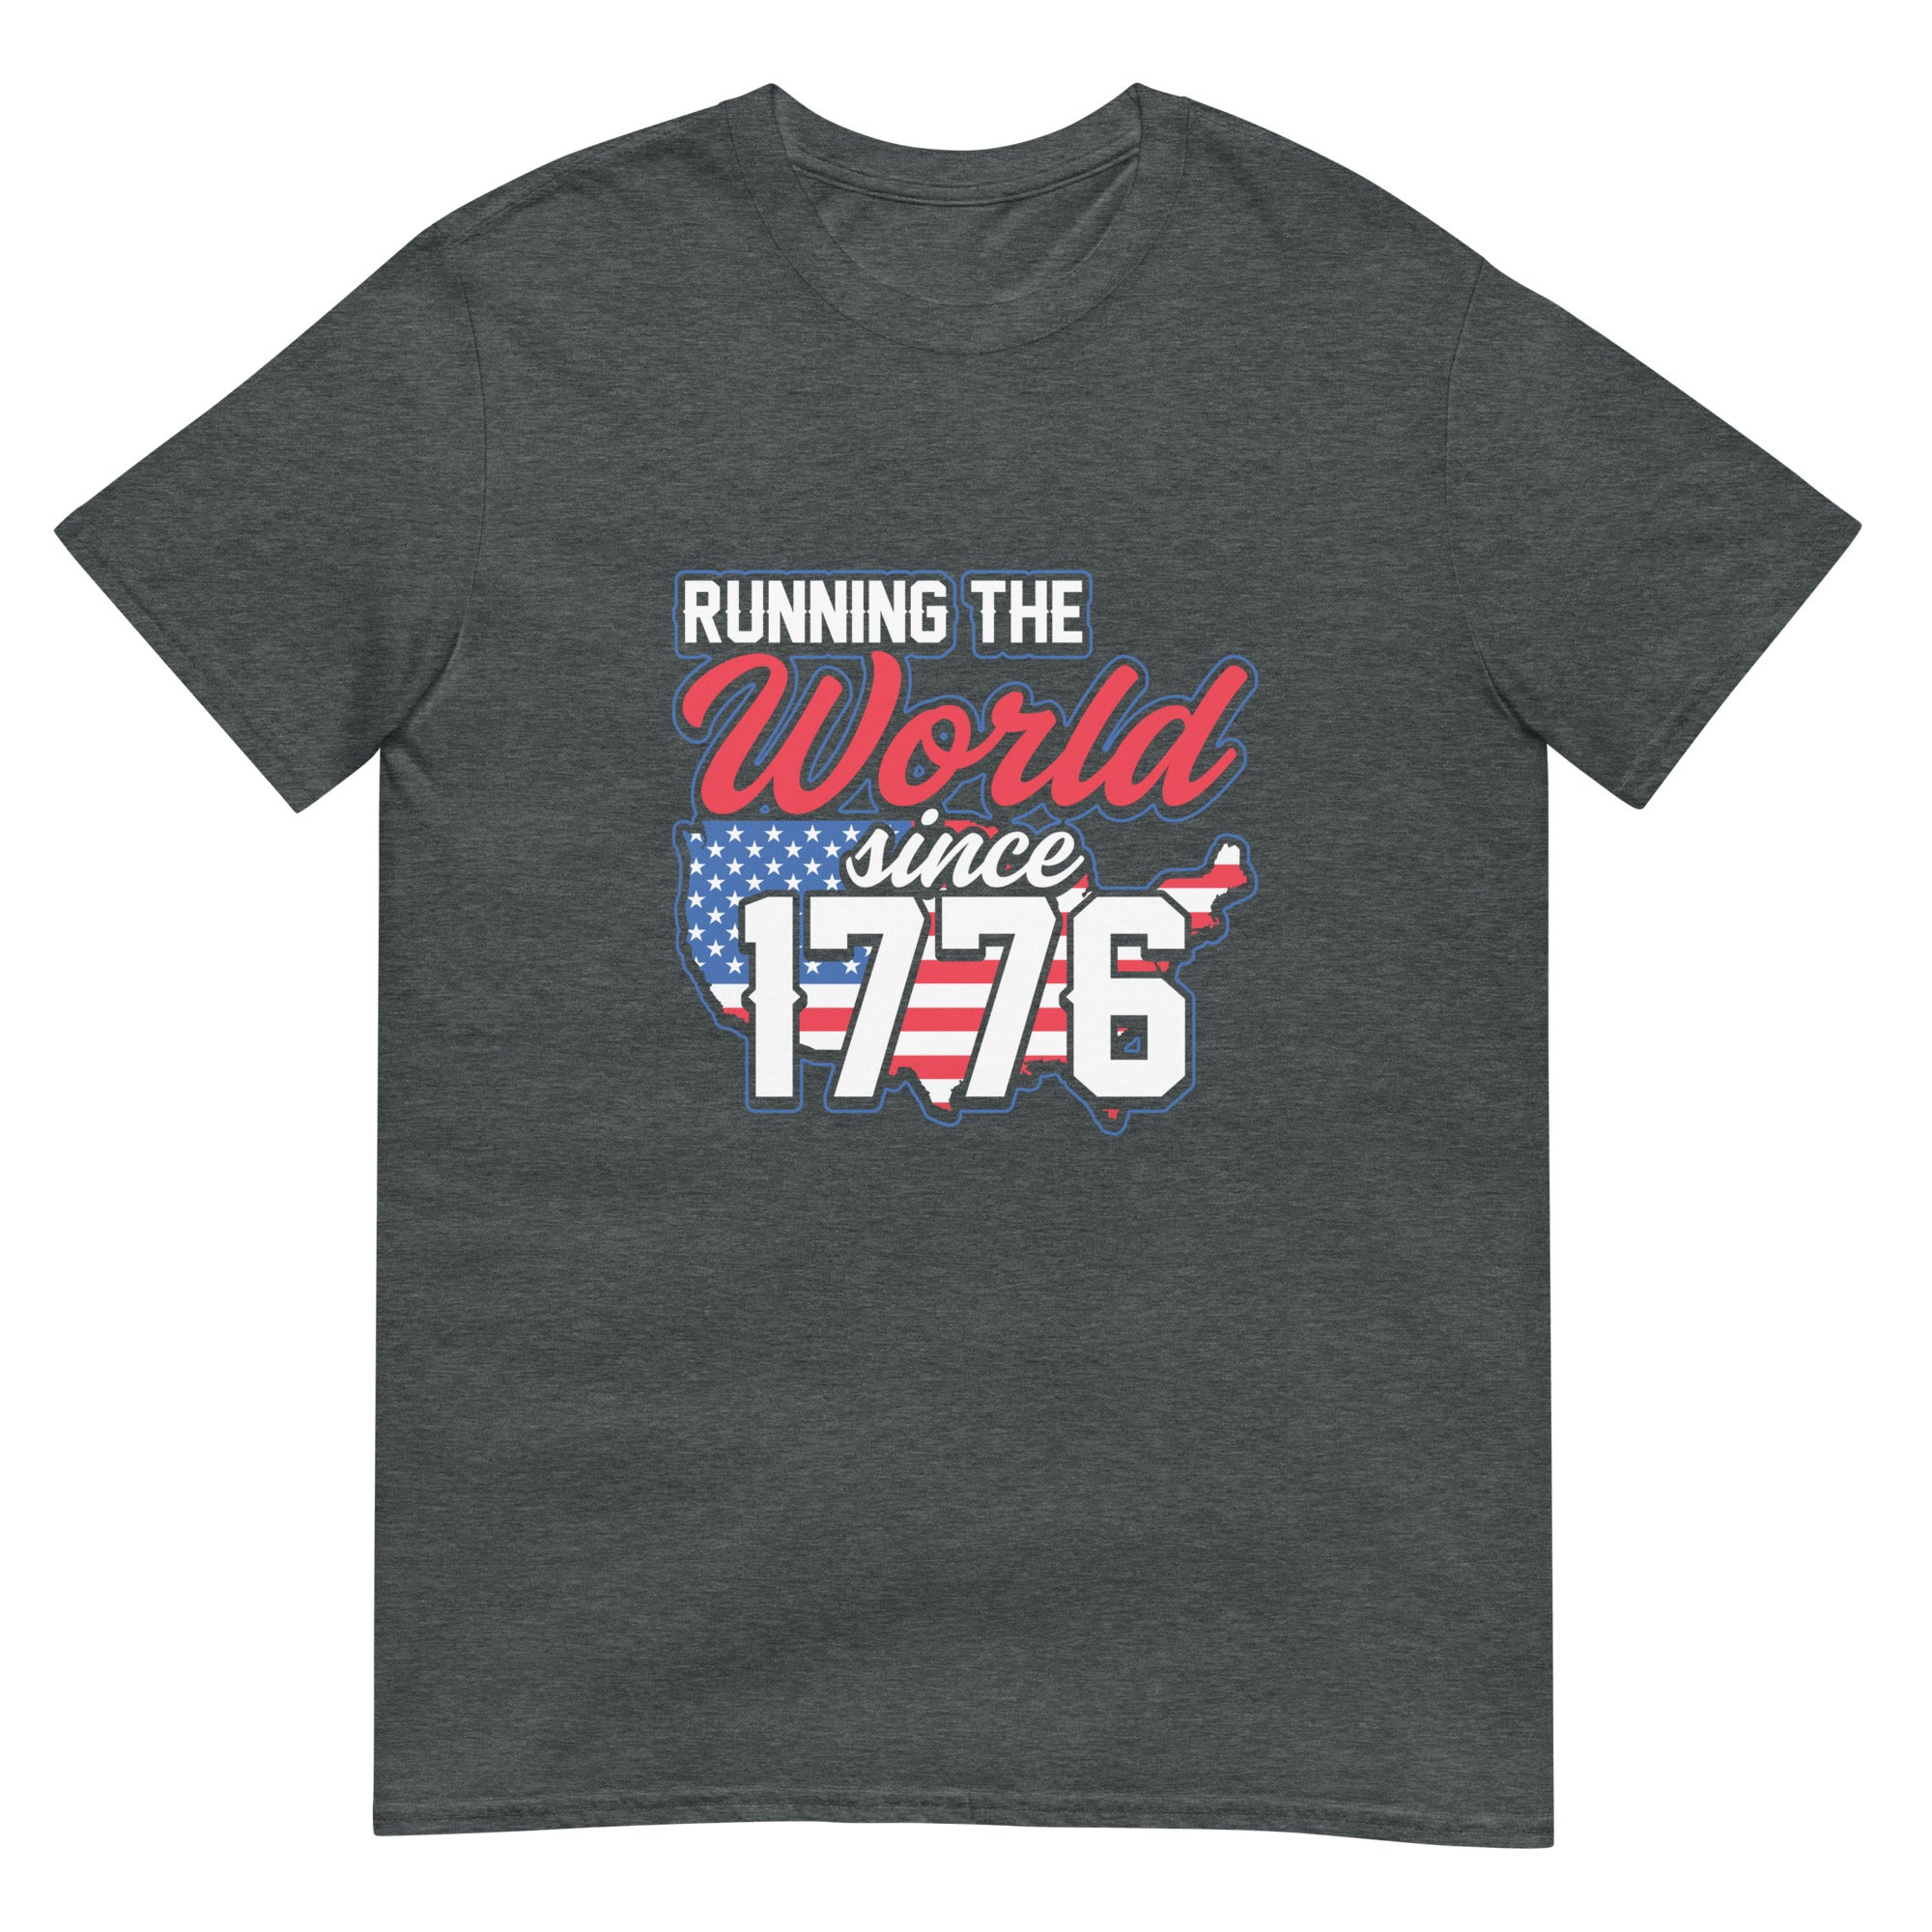 Running the World Short-Sleeve Unisex T-Shirt